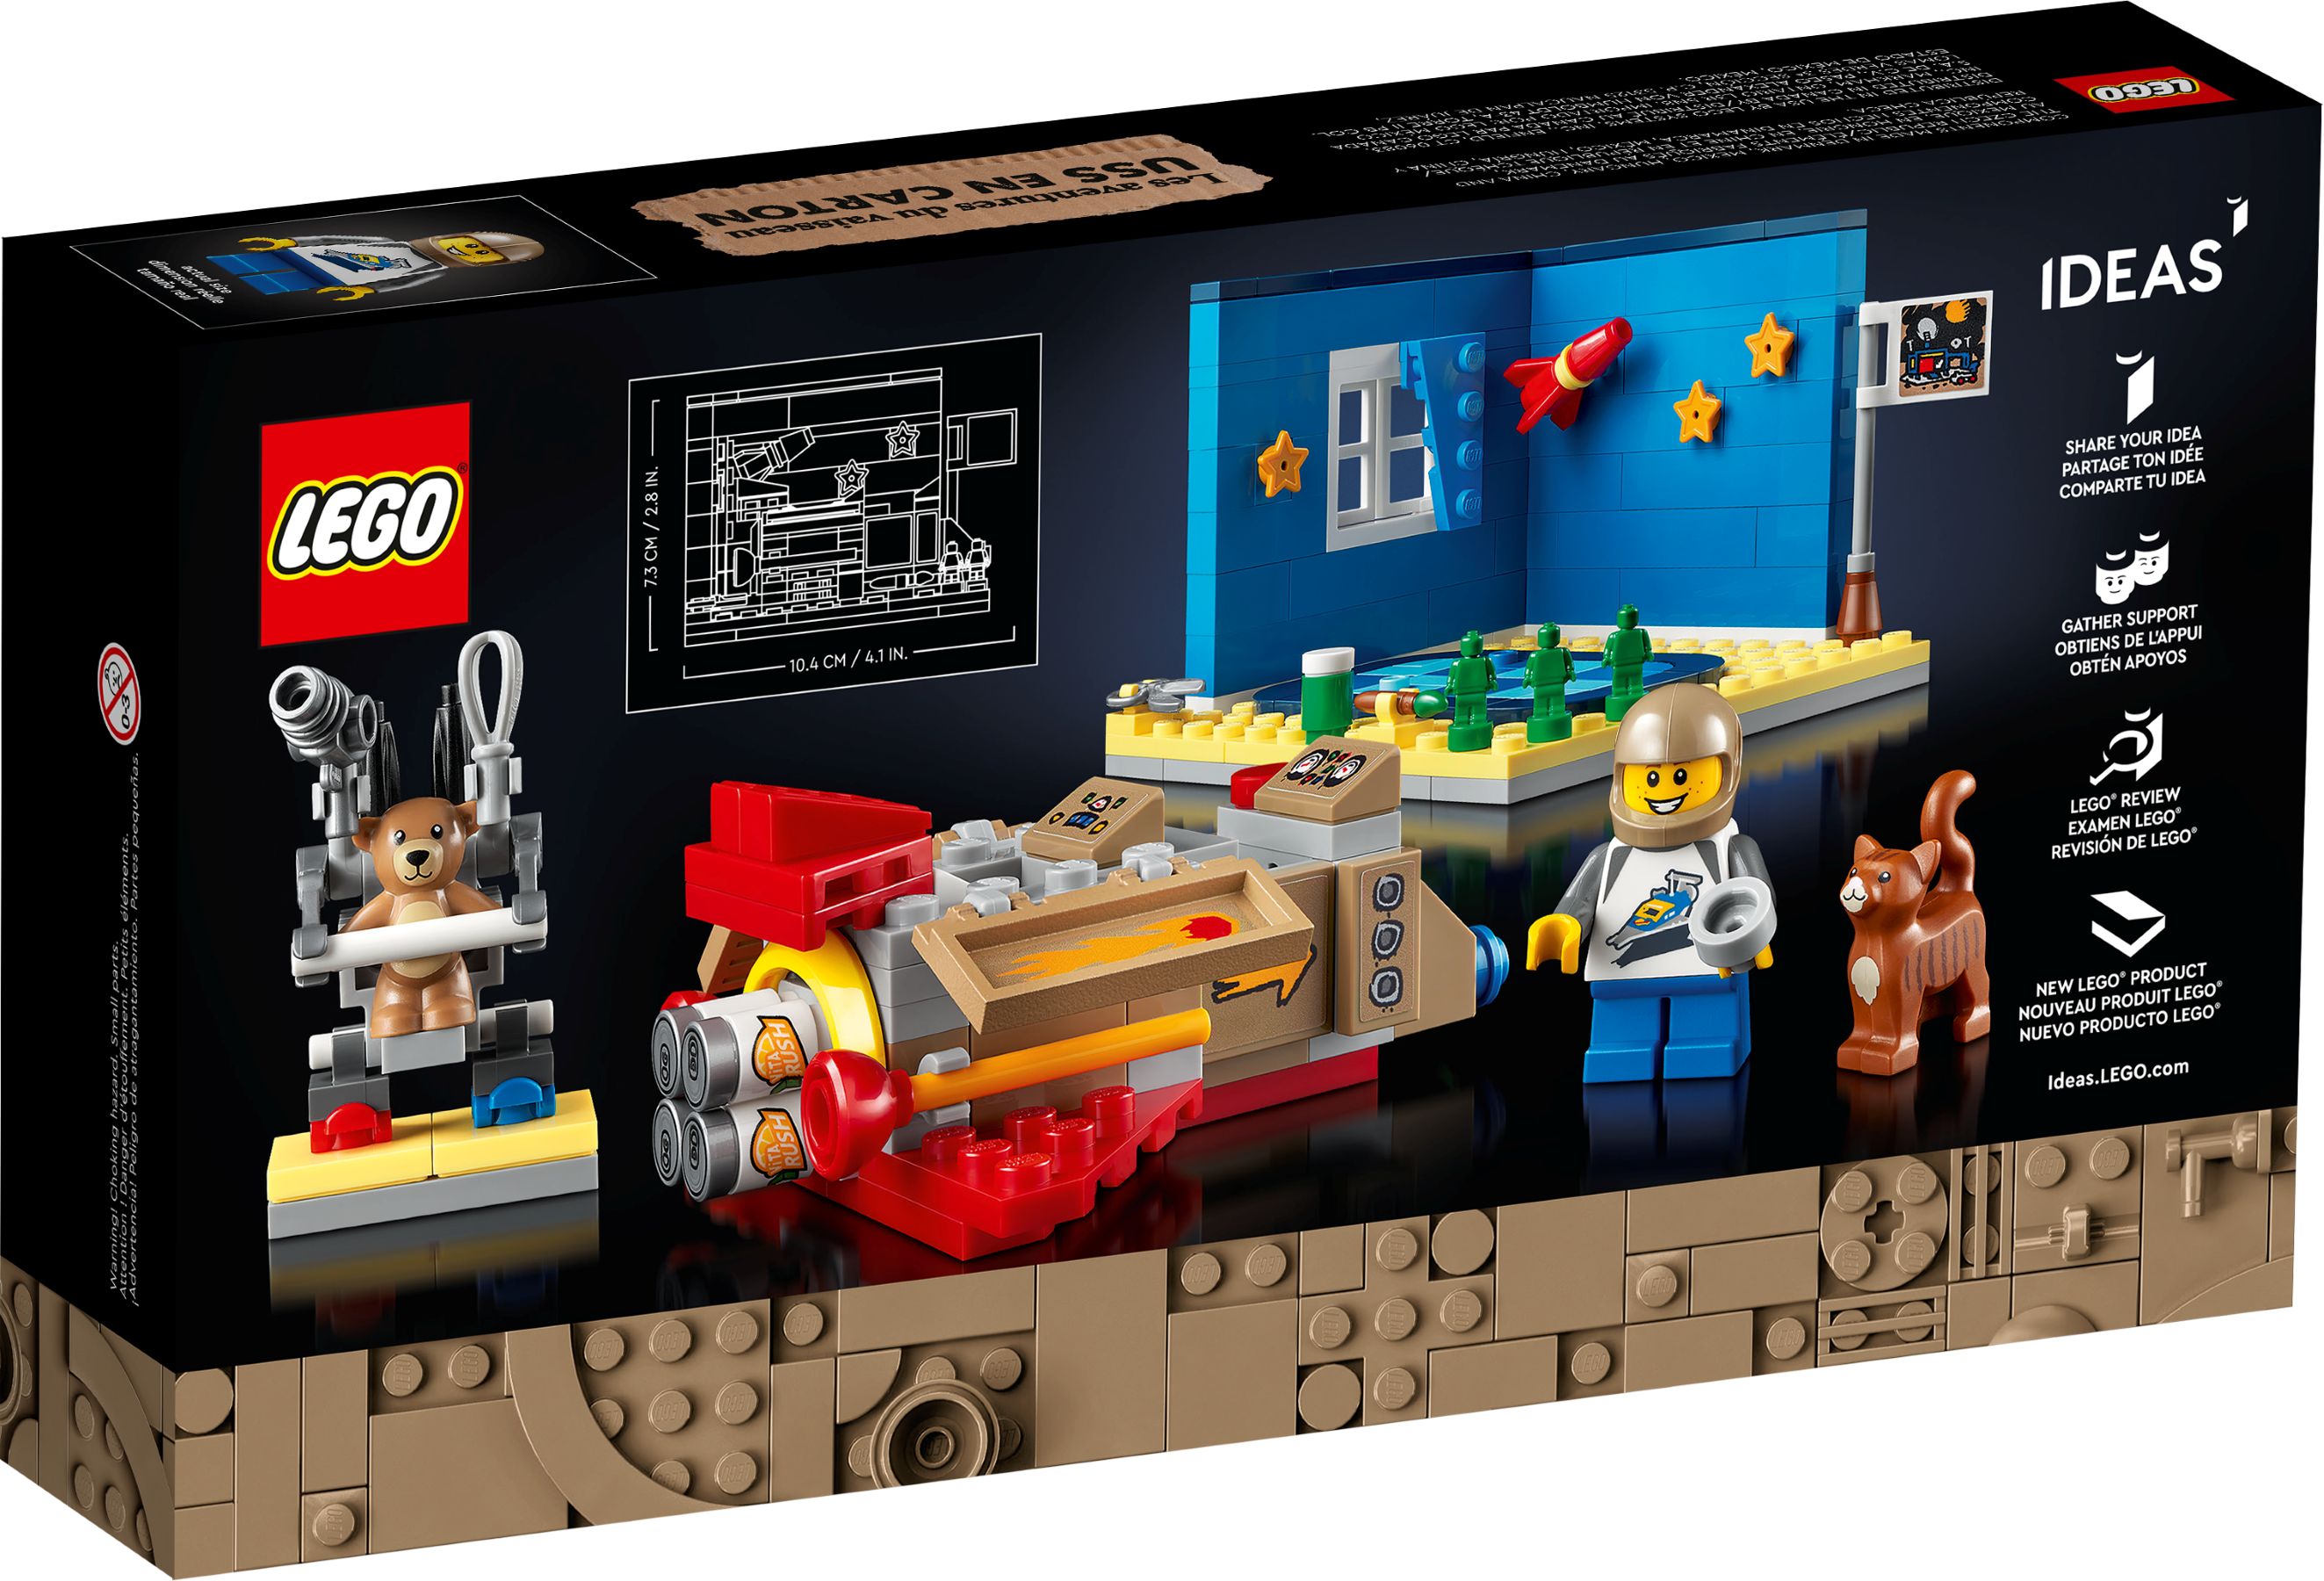 LEGO Promotional 40533 Abenteuer im Astronauten-Kinderzimmer LEGO_40533_alt2.jpg